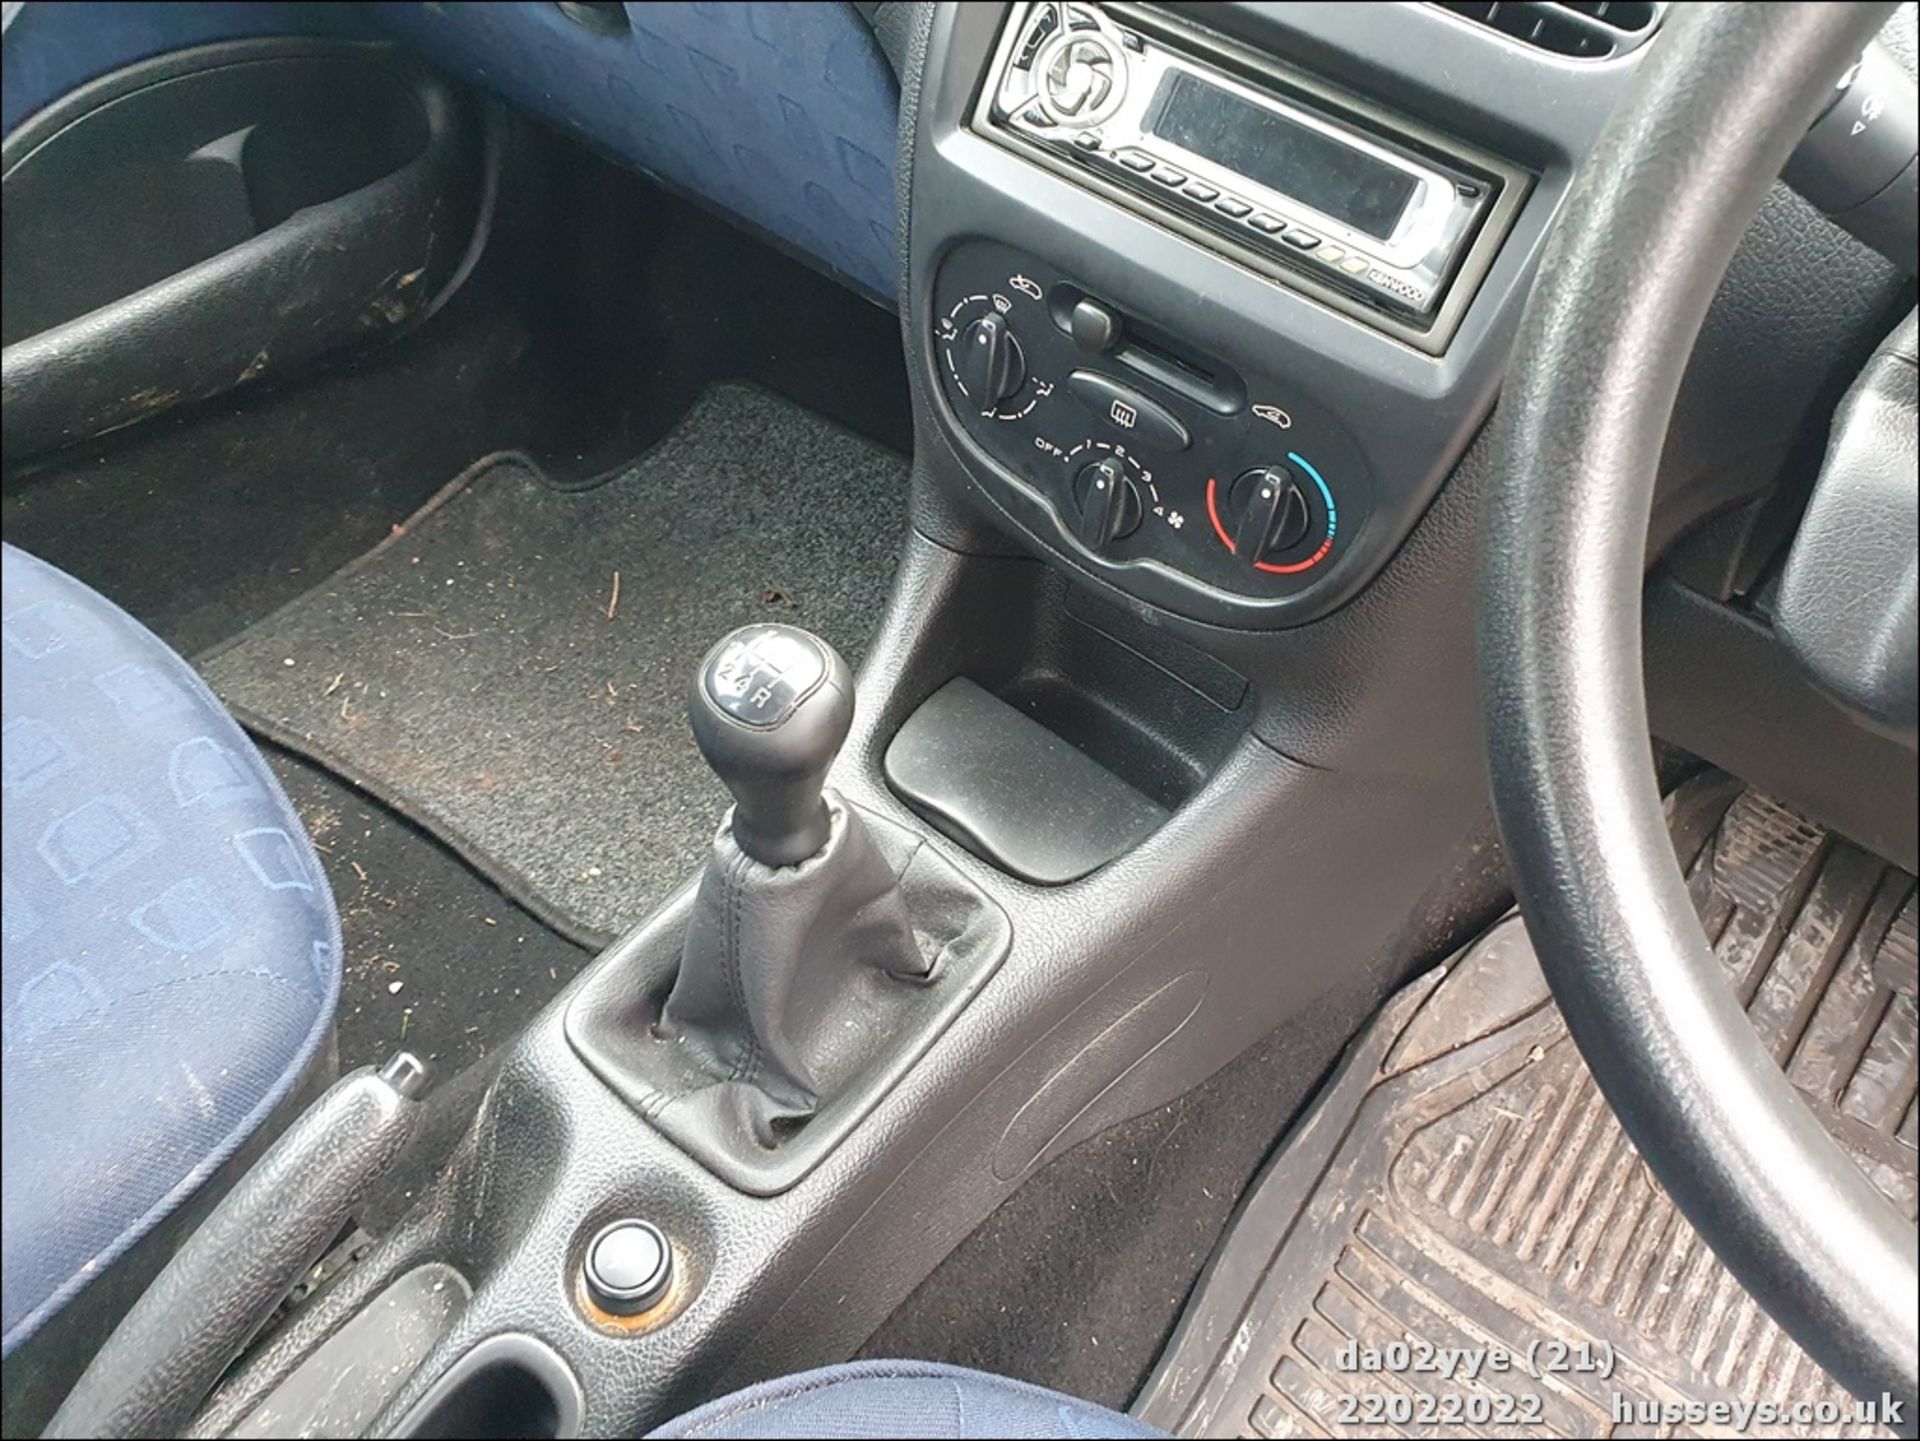 02/02 PEUGEOT 206 STYLE HDI - 1398cc 3dr Hatchback (Blue, 103k) - Image 21 of 38